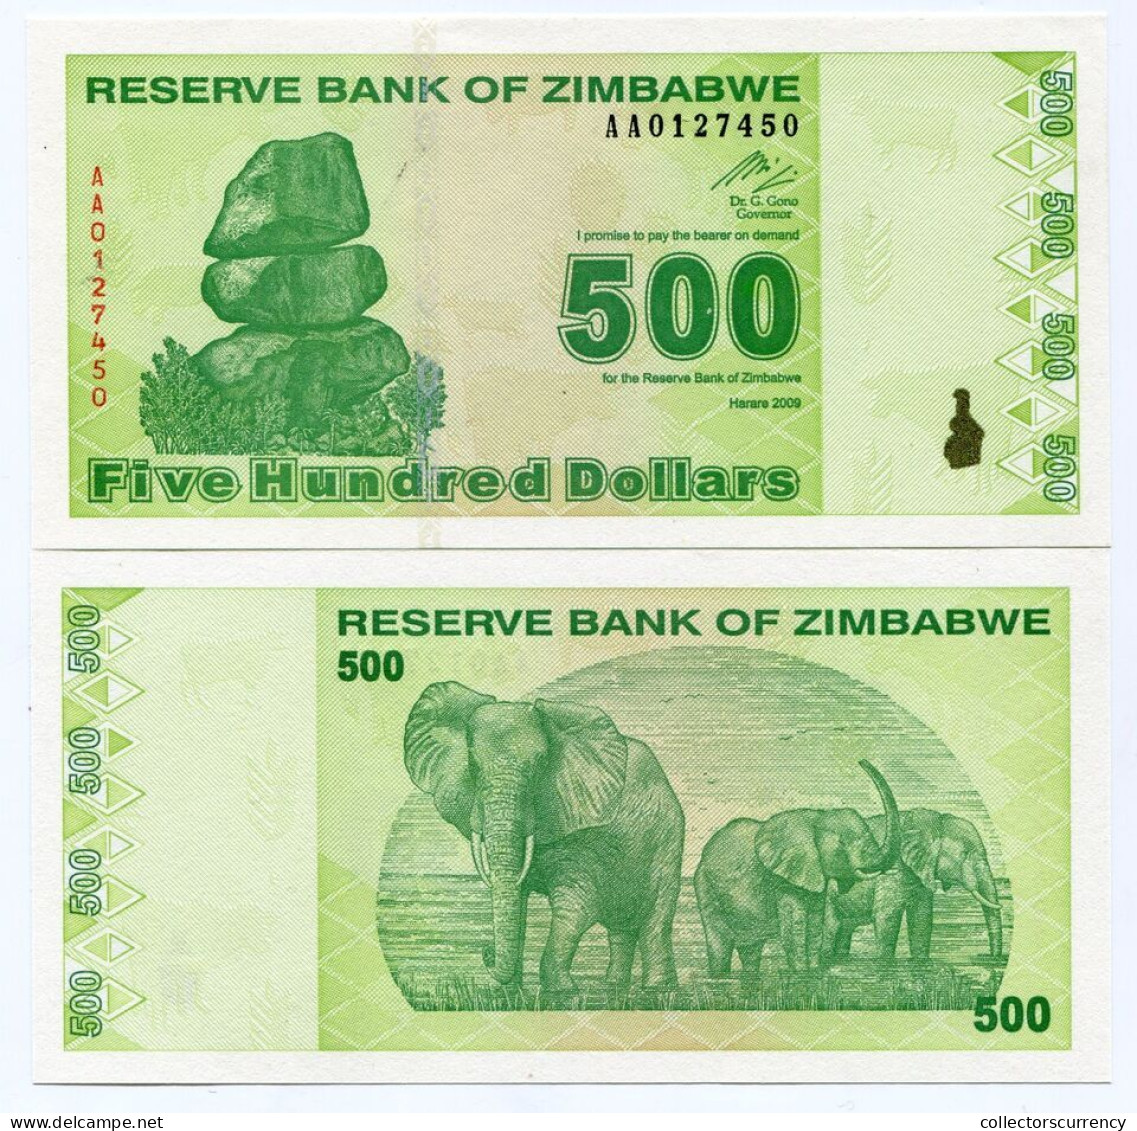 ZIMBABWE 2009  500 DOLLARS  UNCIRCULATED BRAND NEW NOTE - EQUIVALENT TO PREVIOUS  50000 Trillion  AA Prefix  P 98 X 5 Pi - Zimbabwe